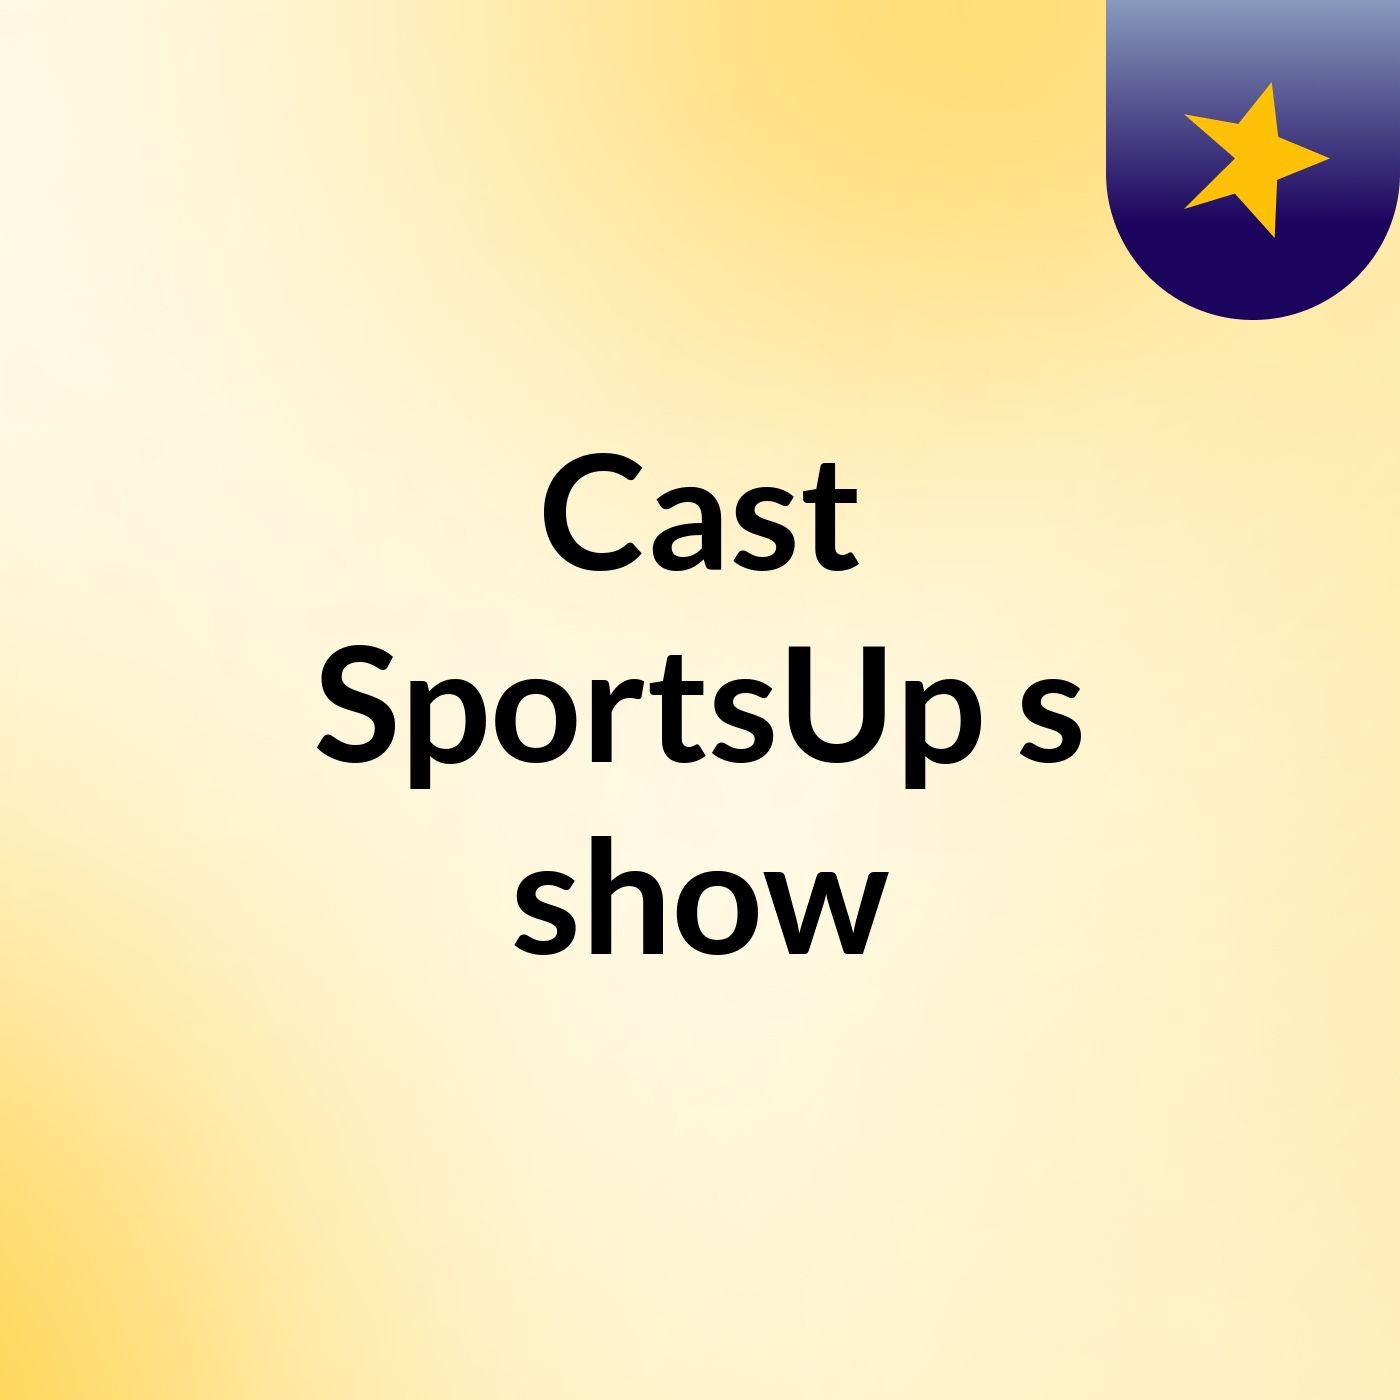 Cast SportsUp's show